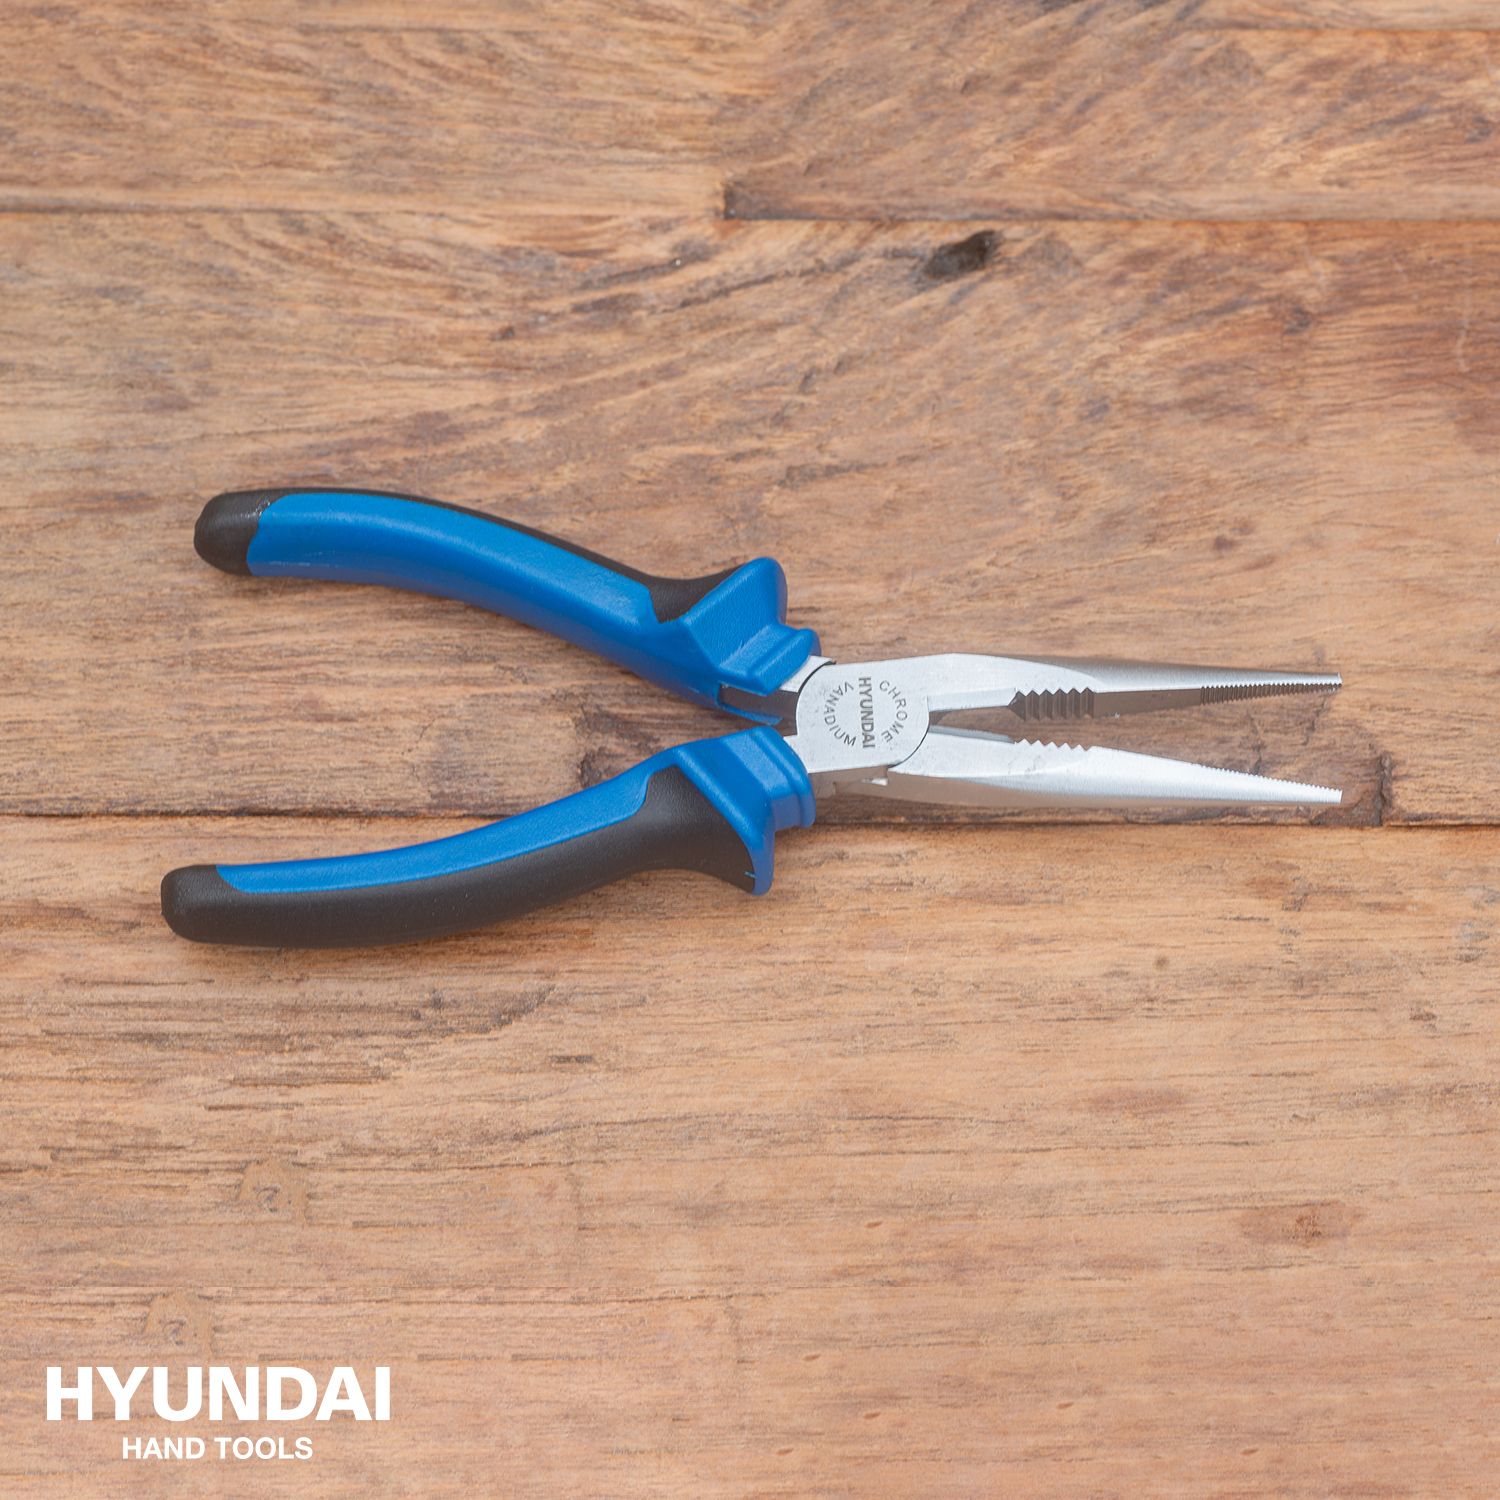 Hyundai long nose pliers